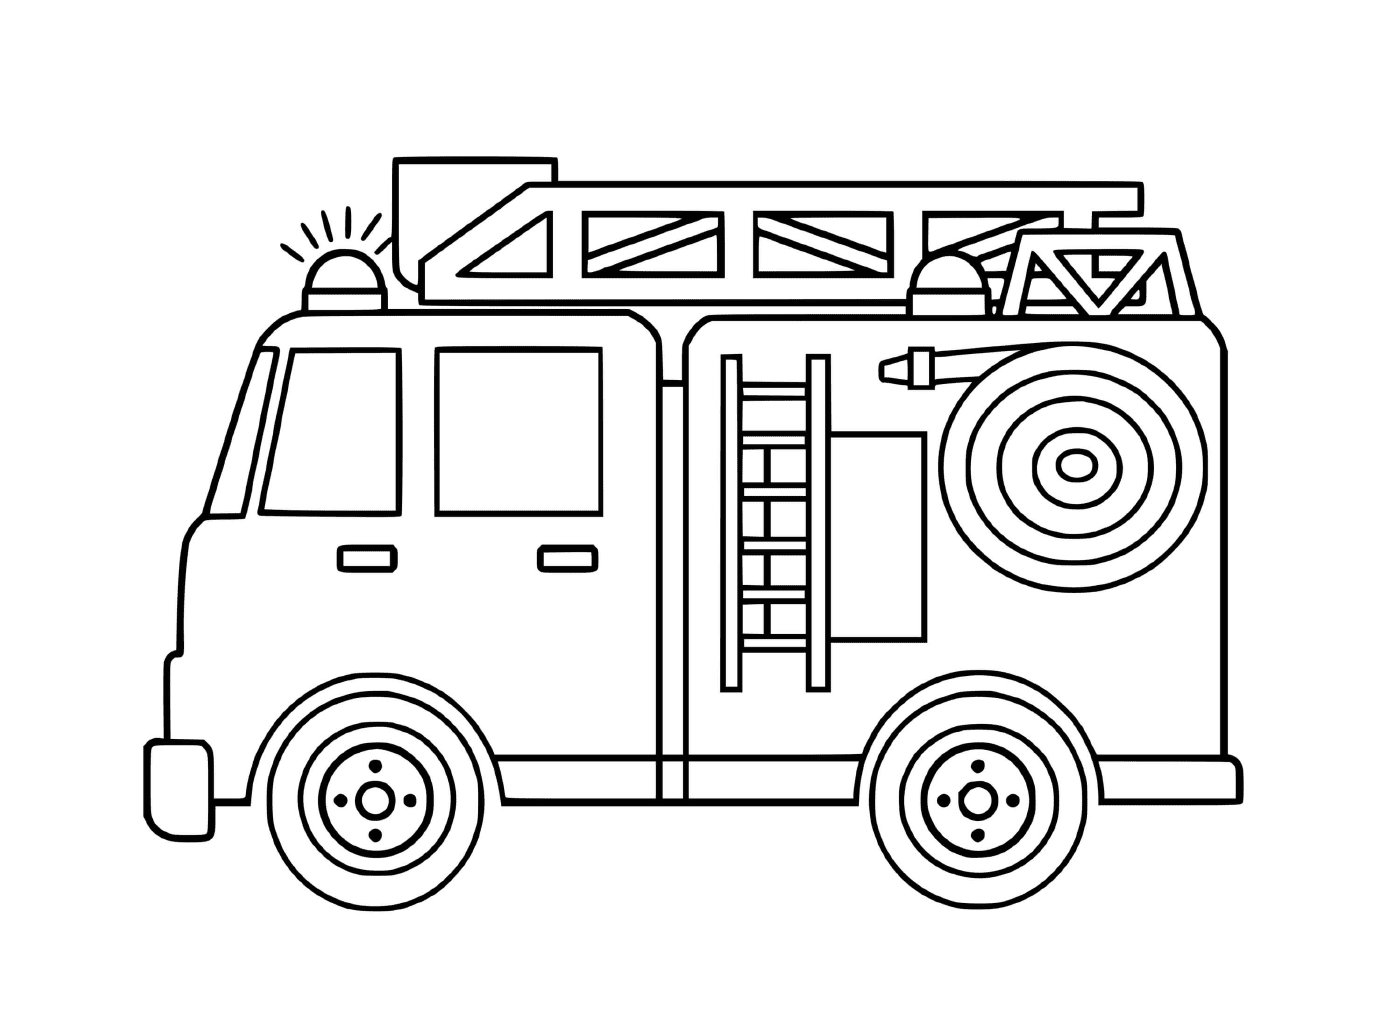  Simple and practical fire van 